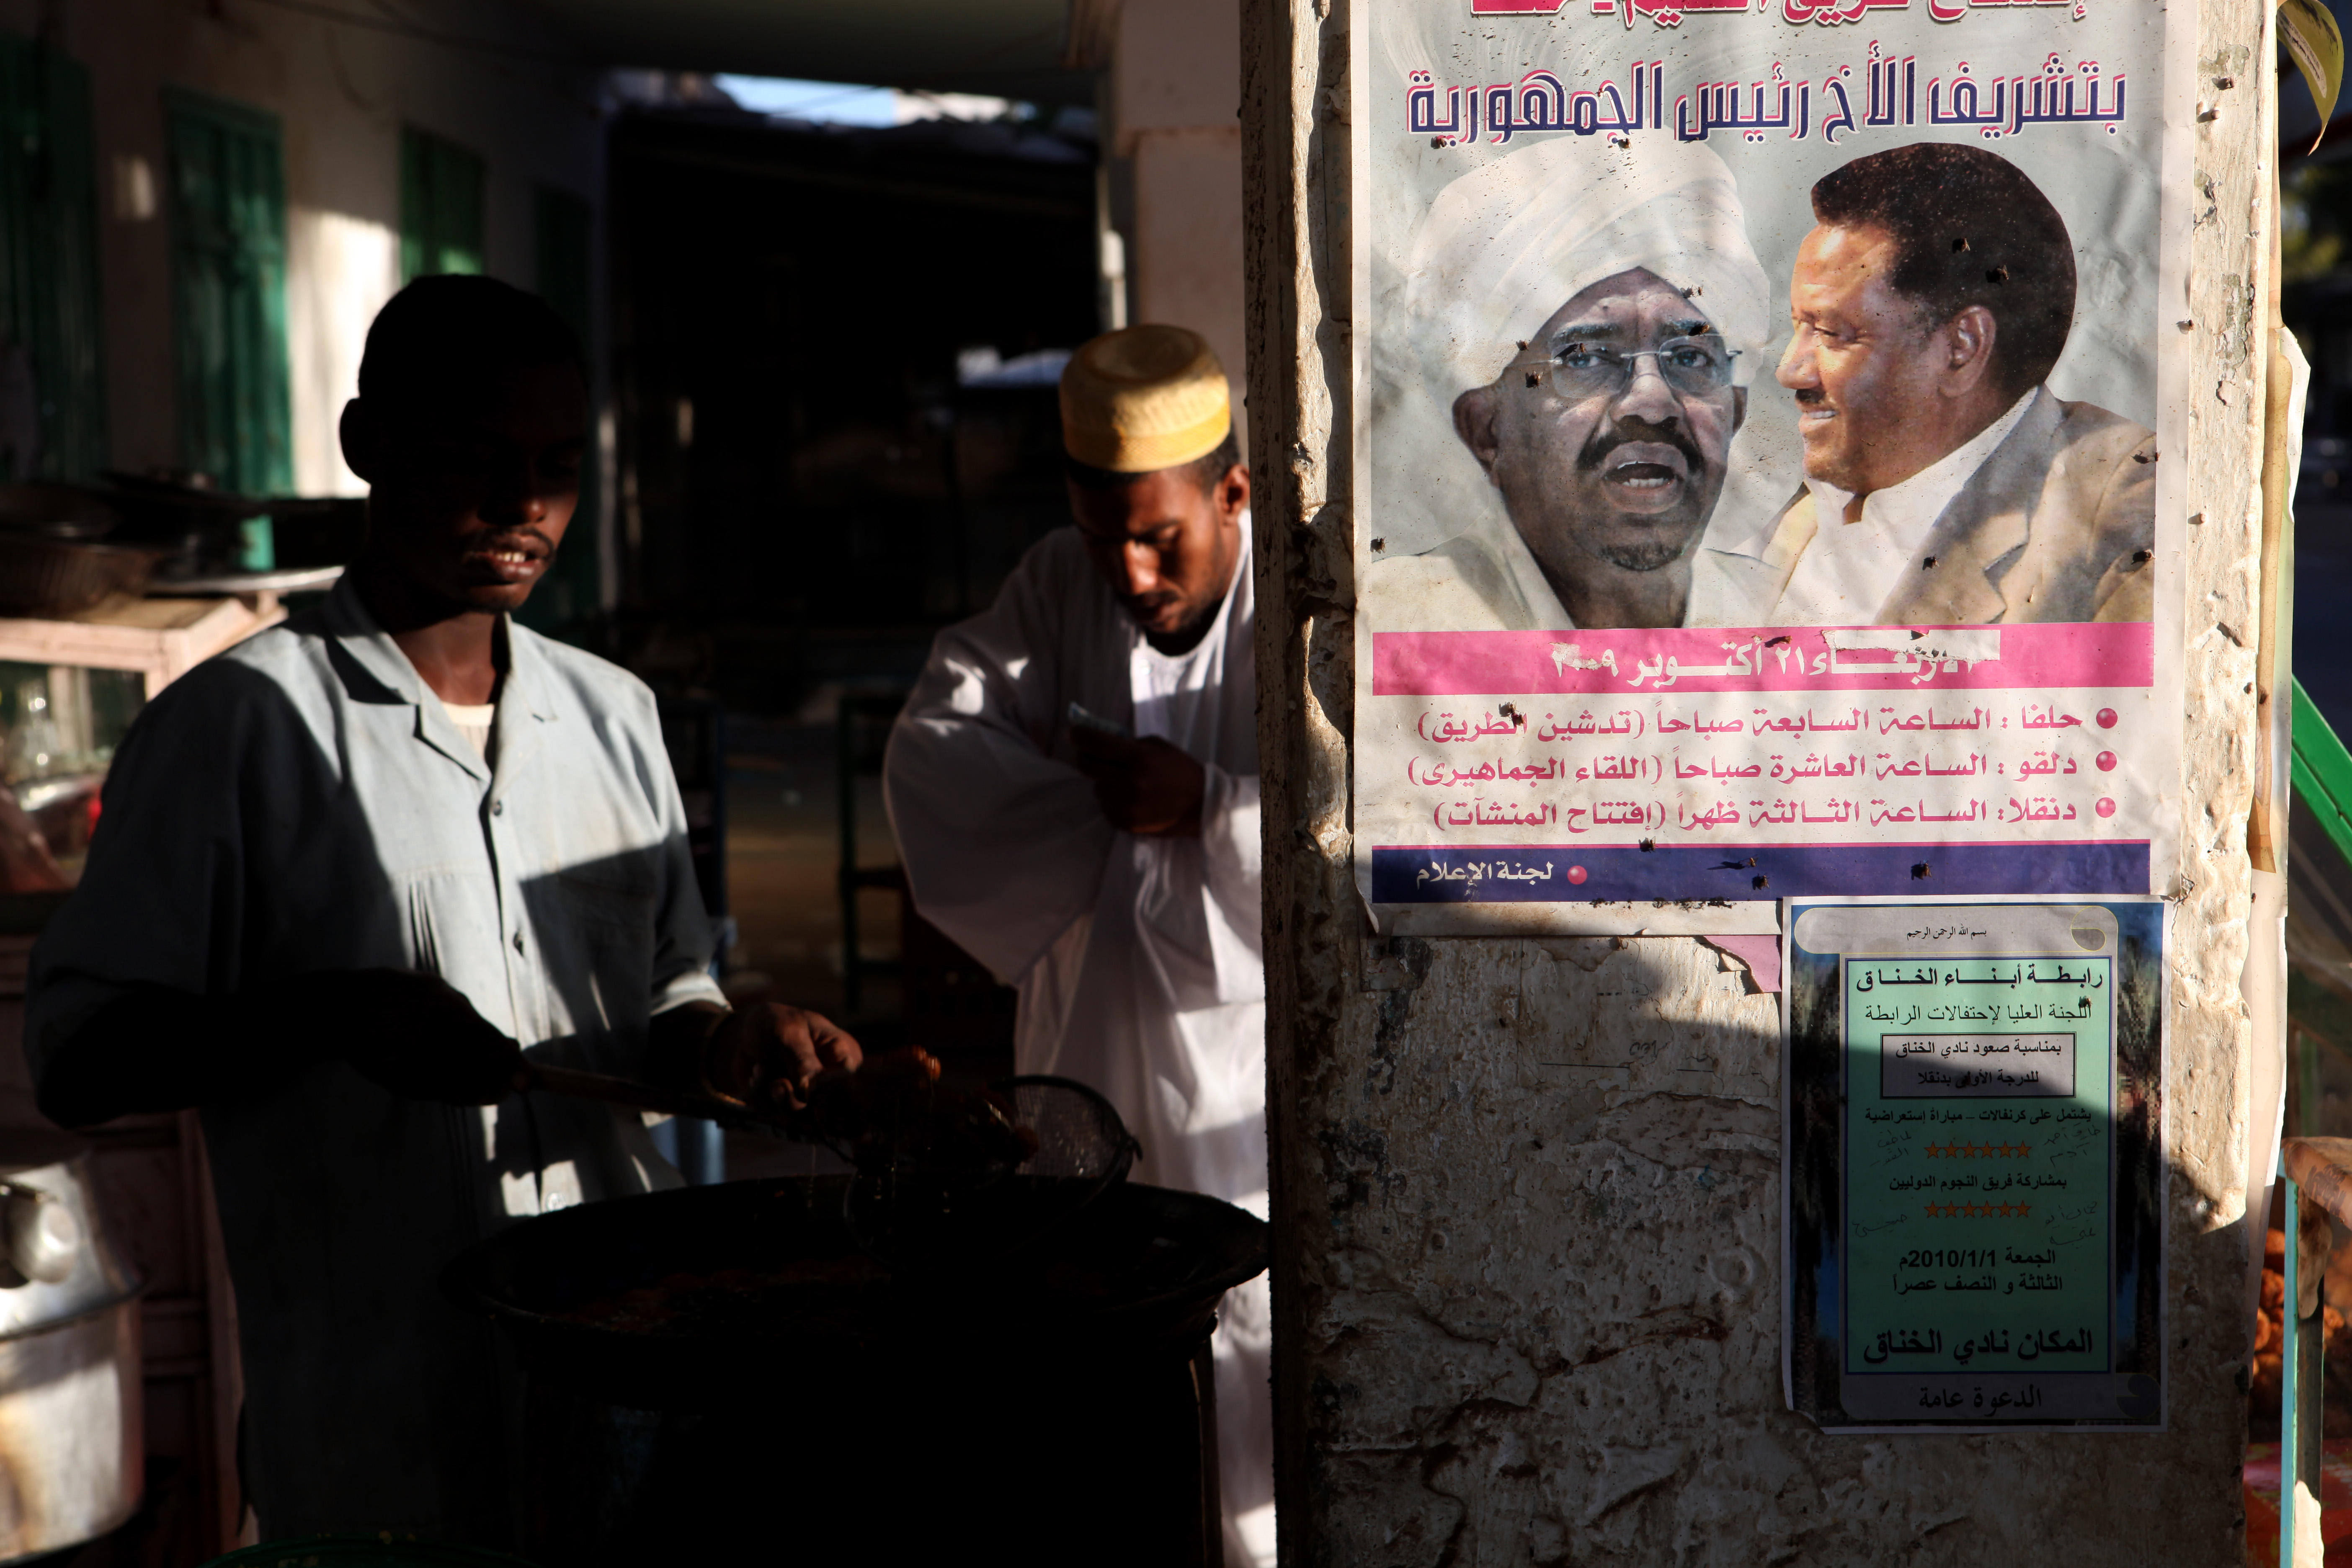 A poster of Omar al Bashir, then president of Sudan